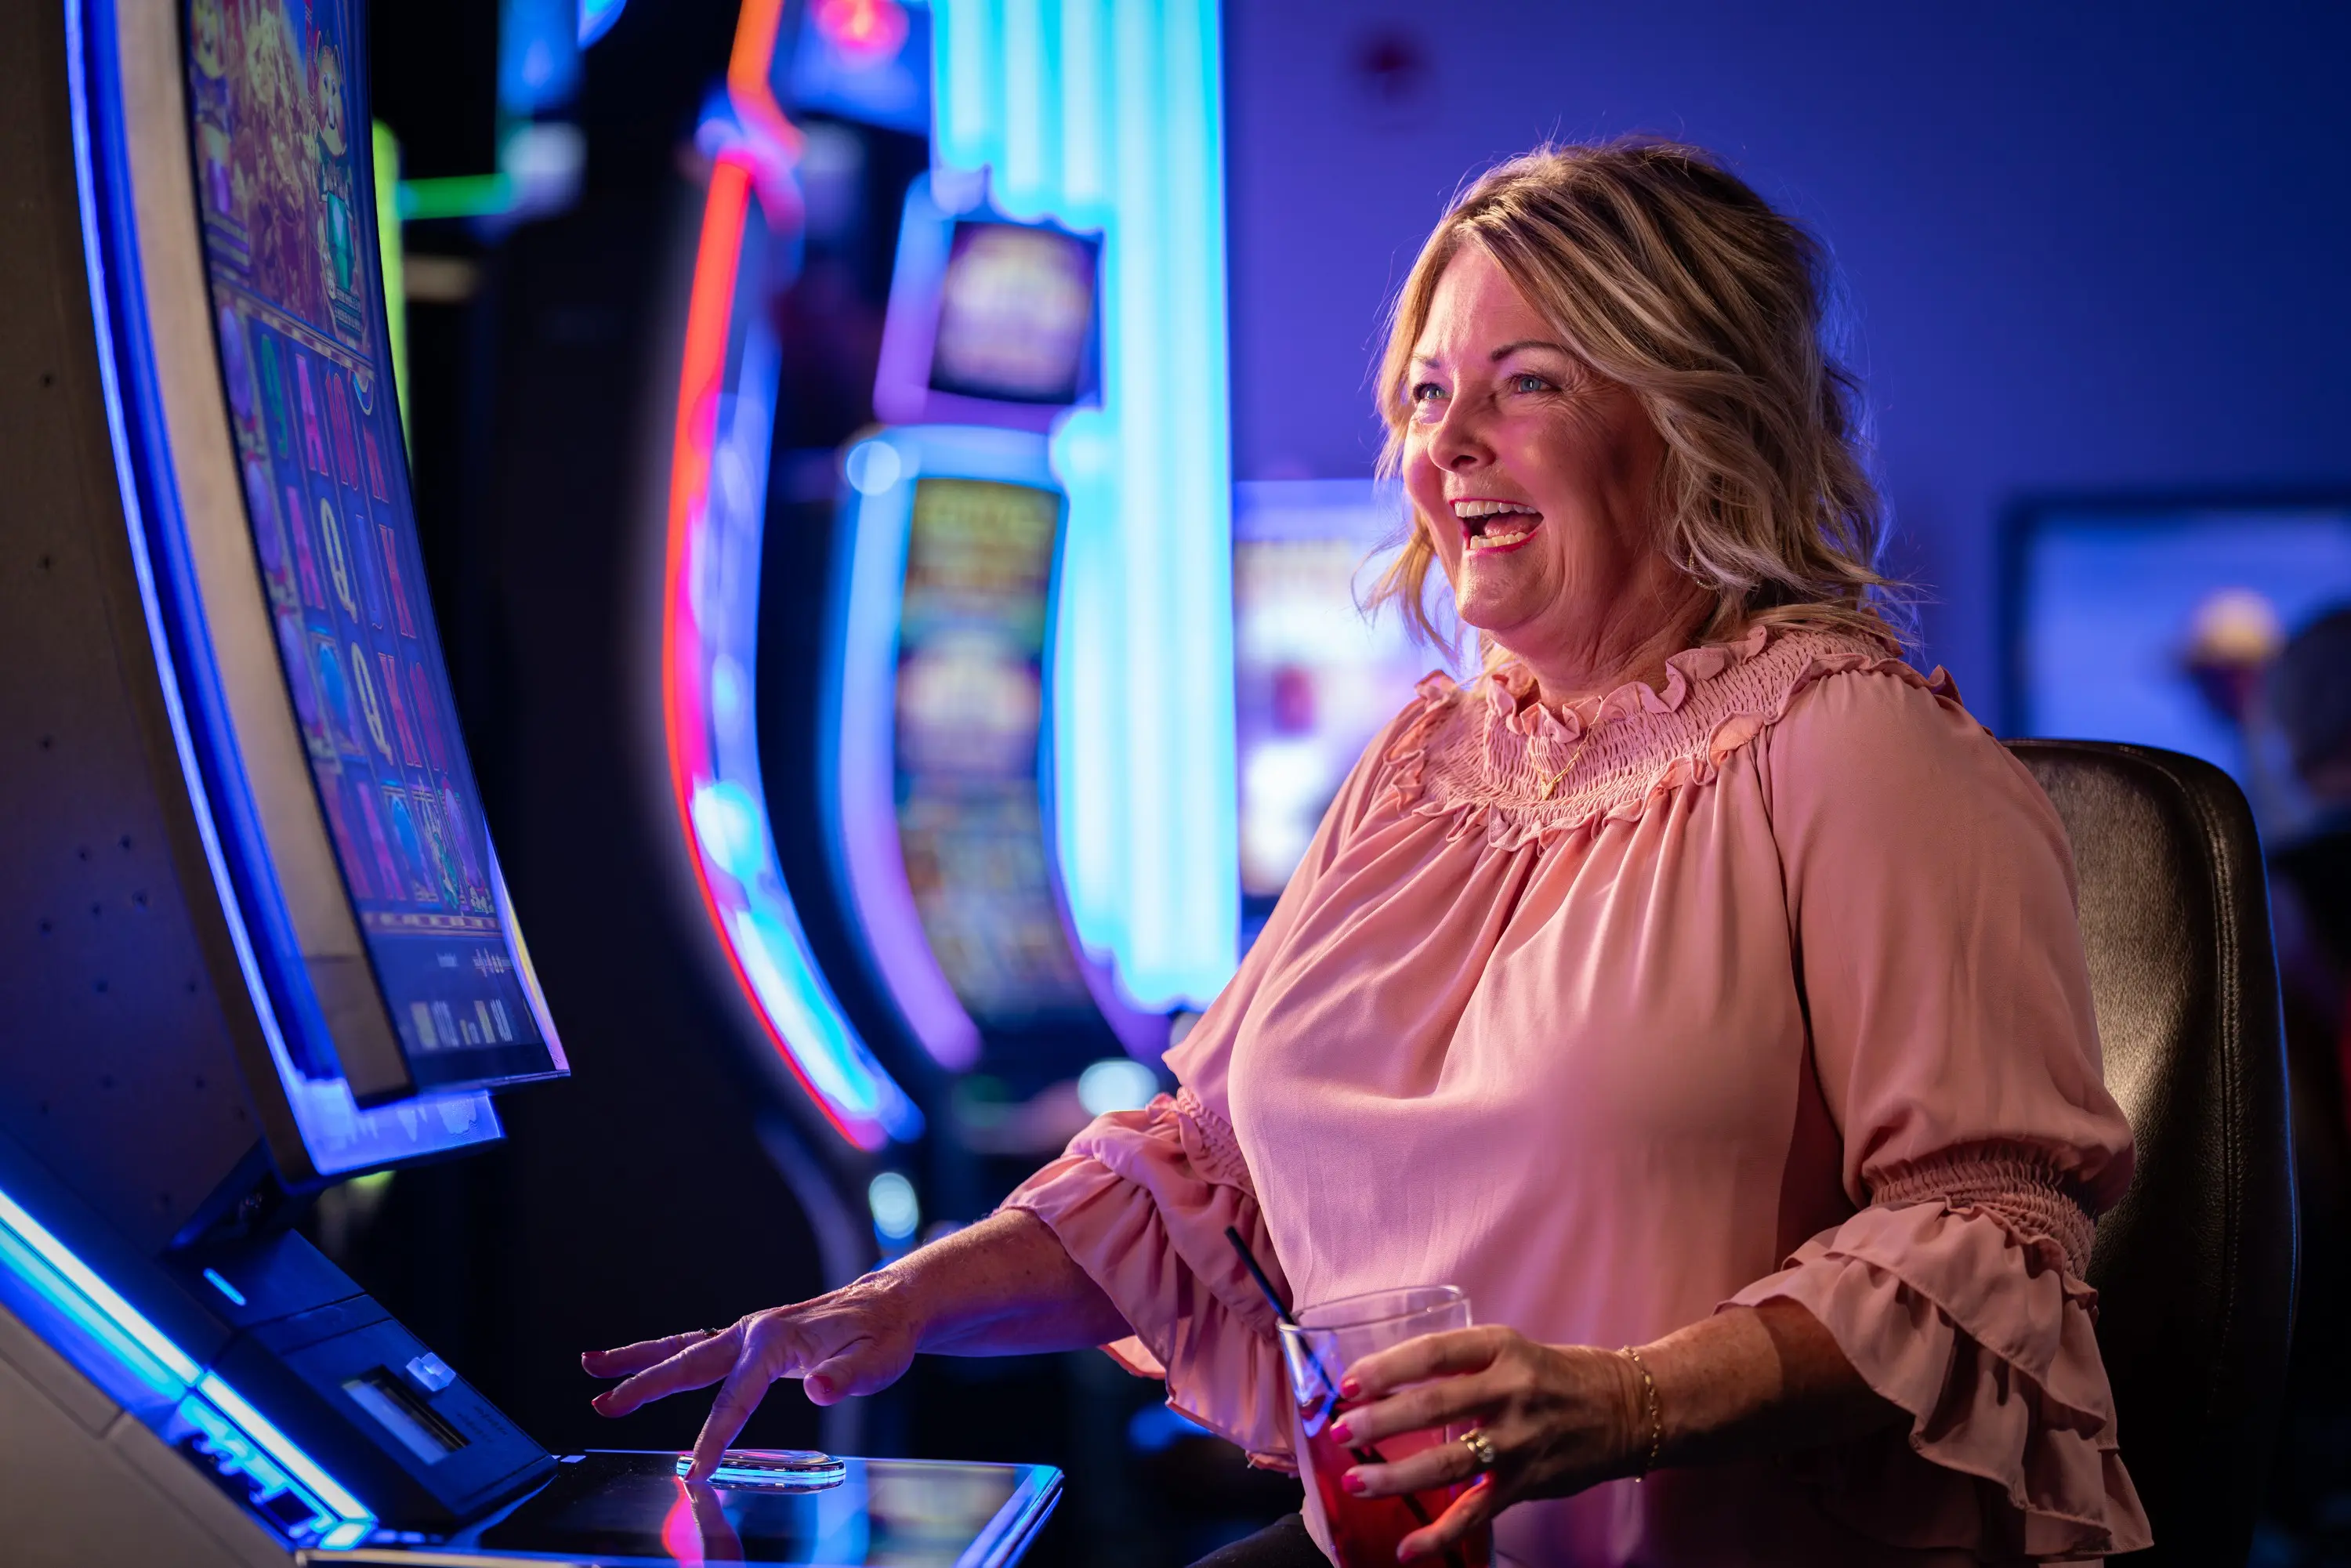 Woman playing slot machine at the Q Casino